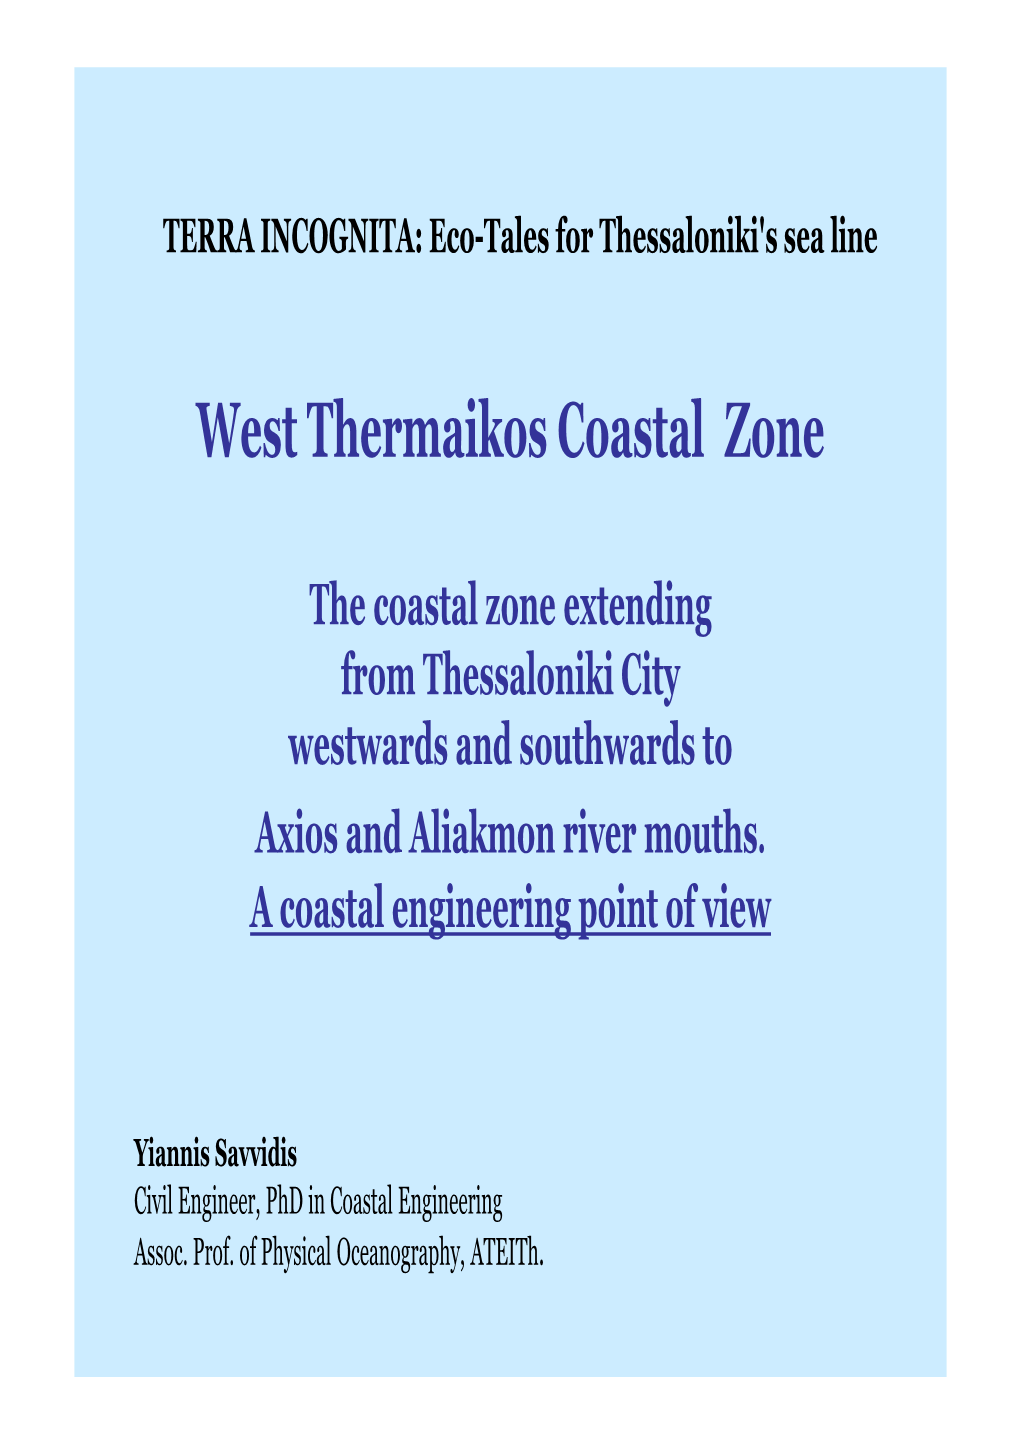 West Thermaikos Coastal Zone